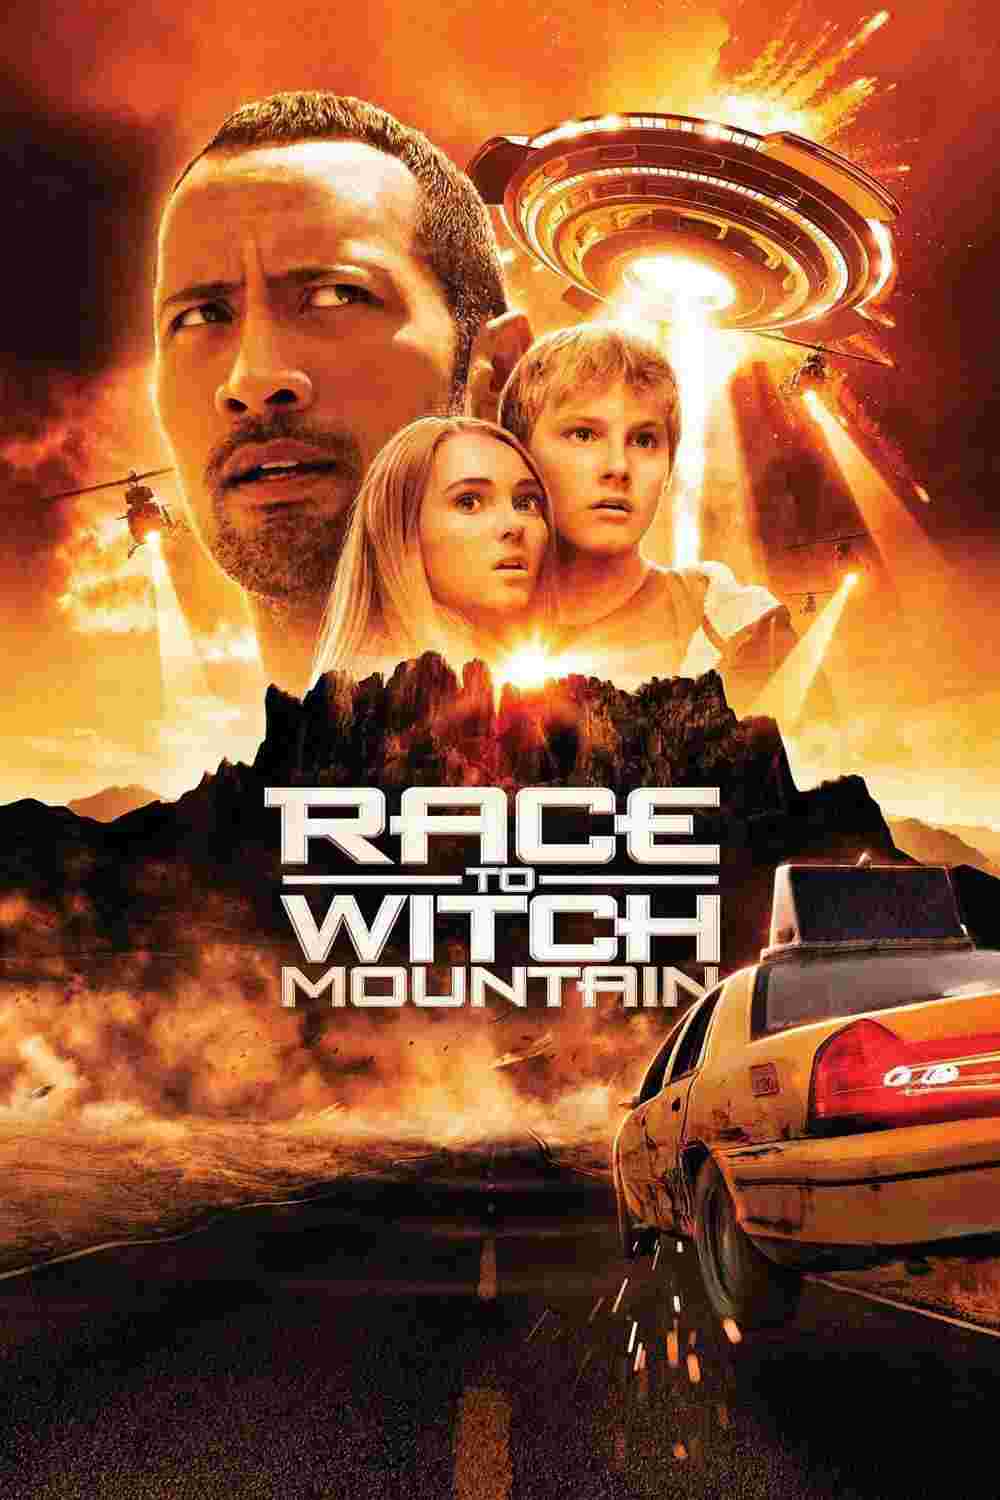 Race to Witch Mountain (2009) Dwayne Johnson